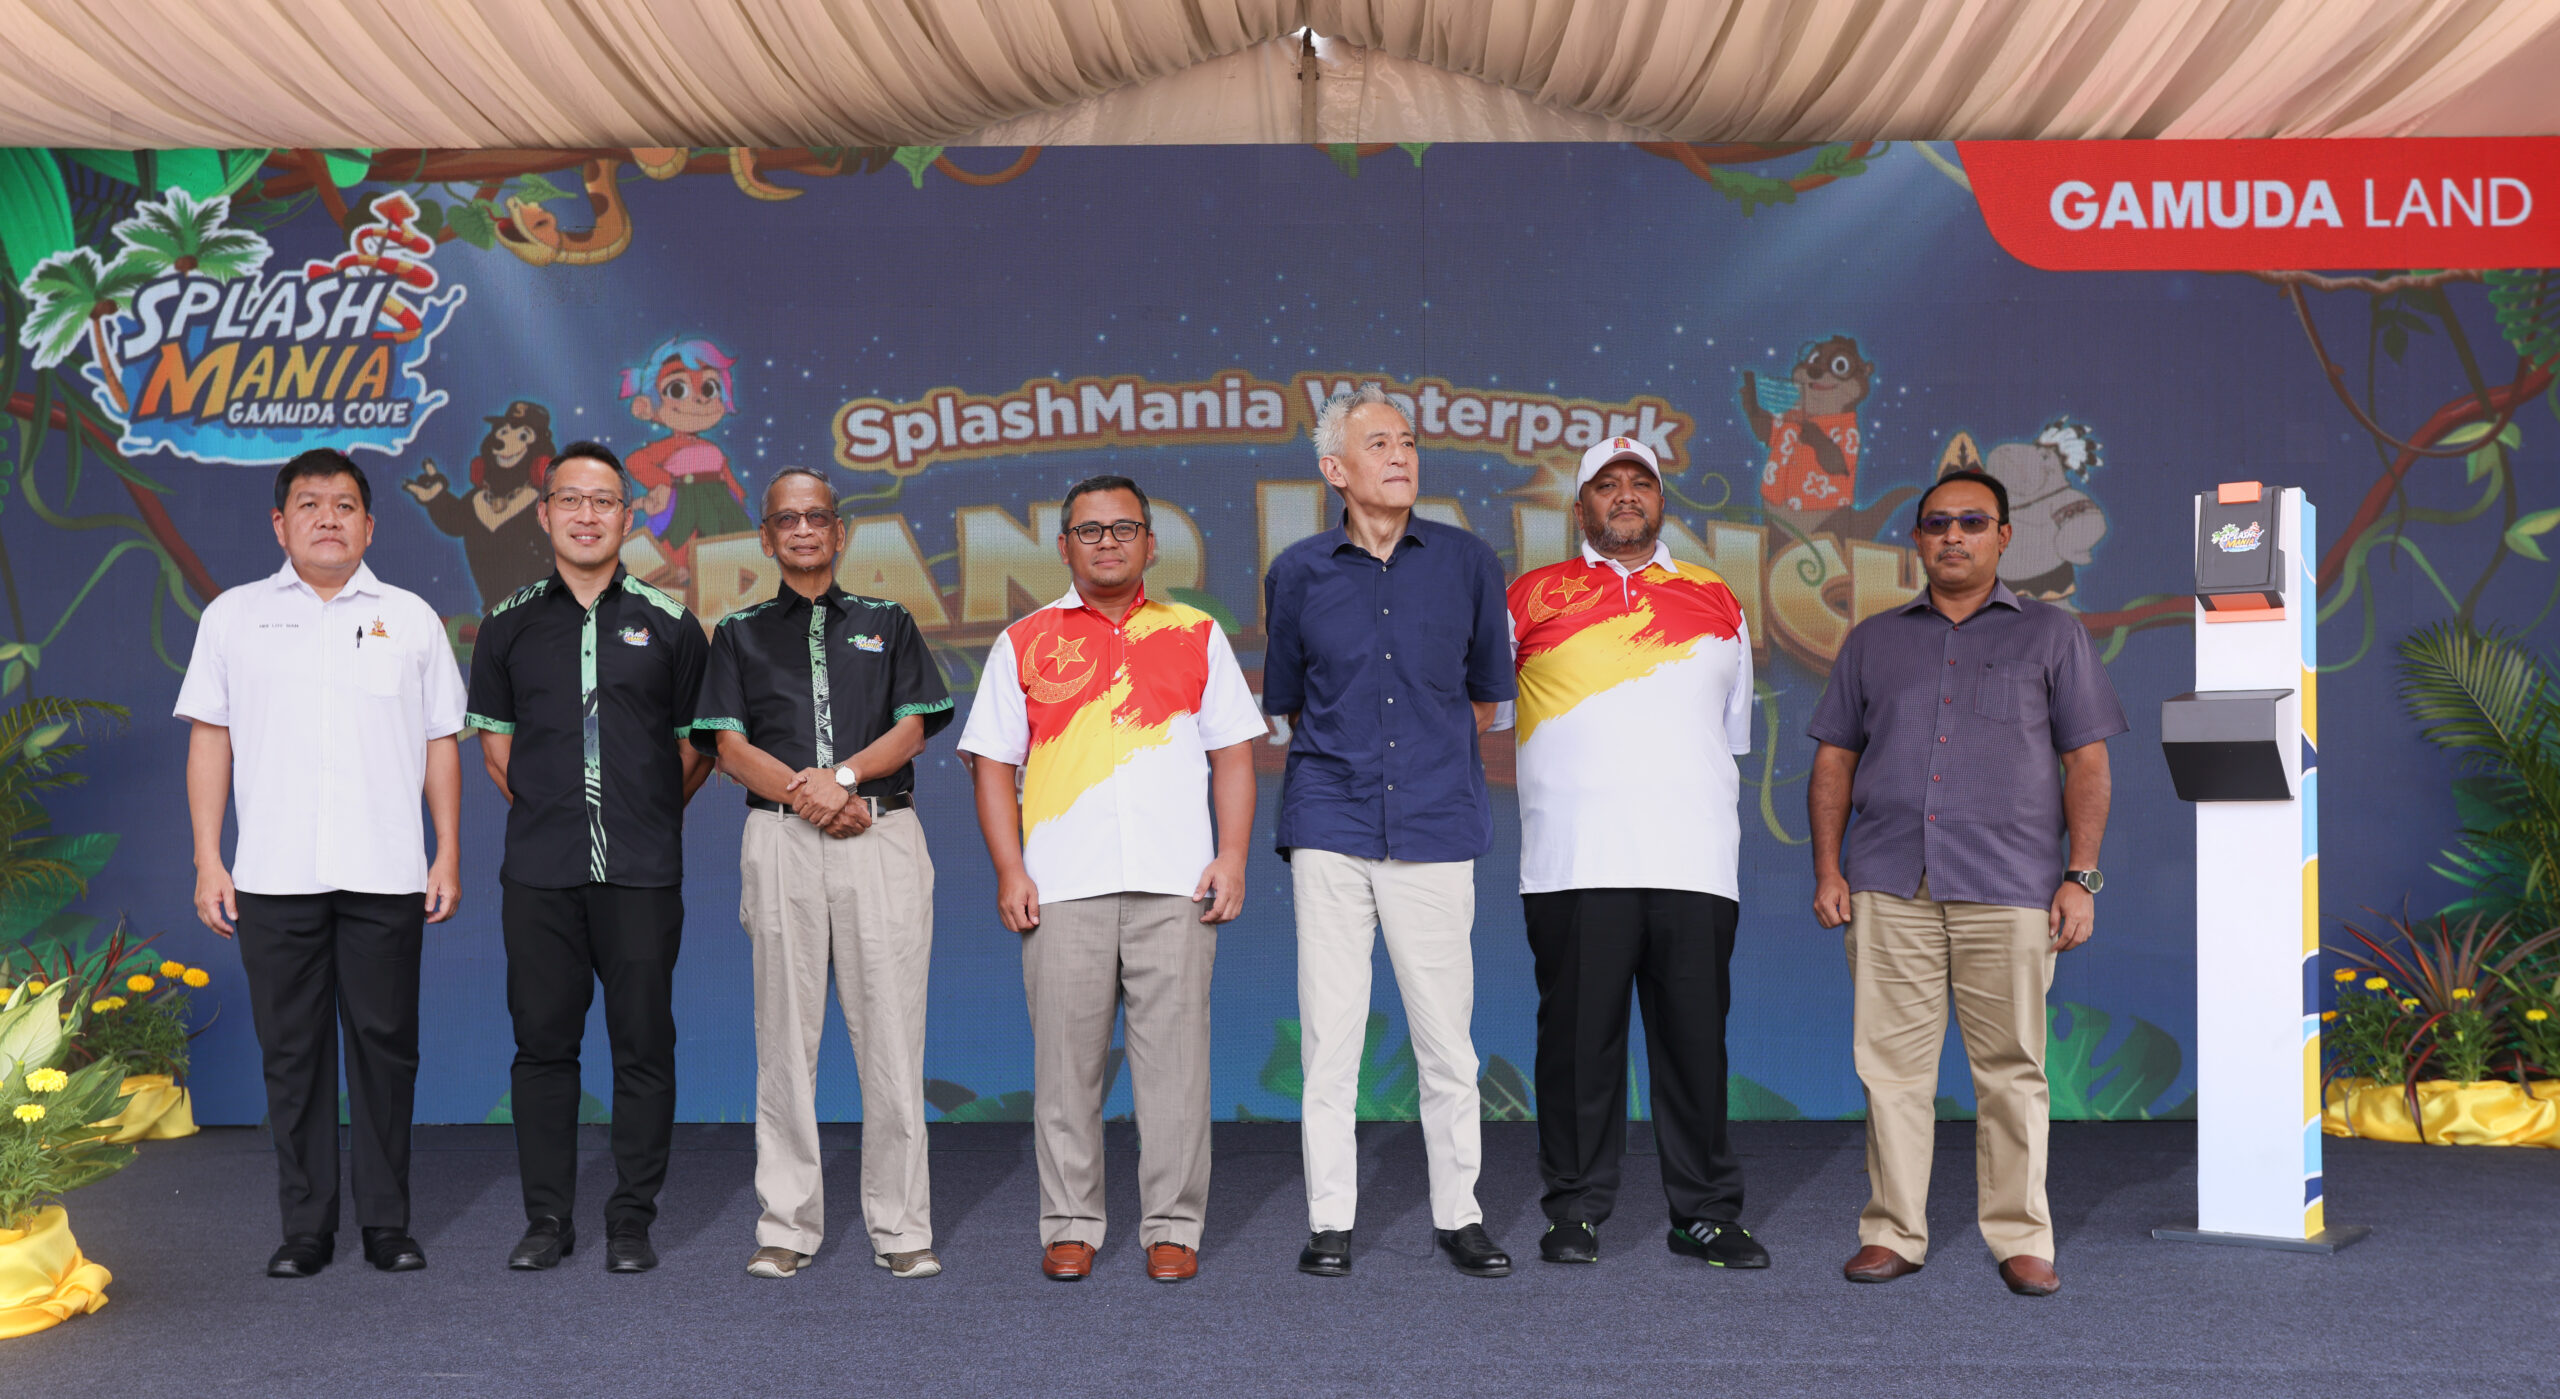 Selangor menteri besar officiates opening of splashmania waterpark in gamuda cove | weirdkaya